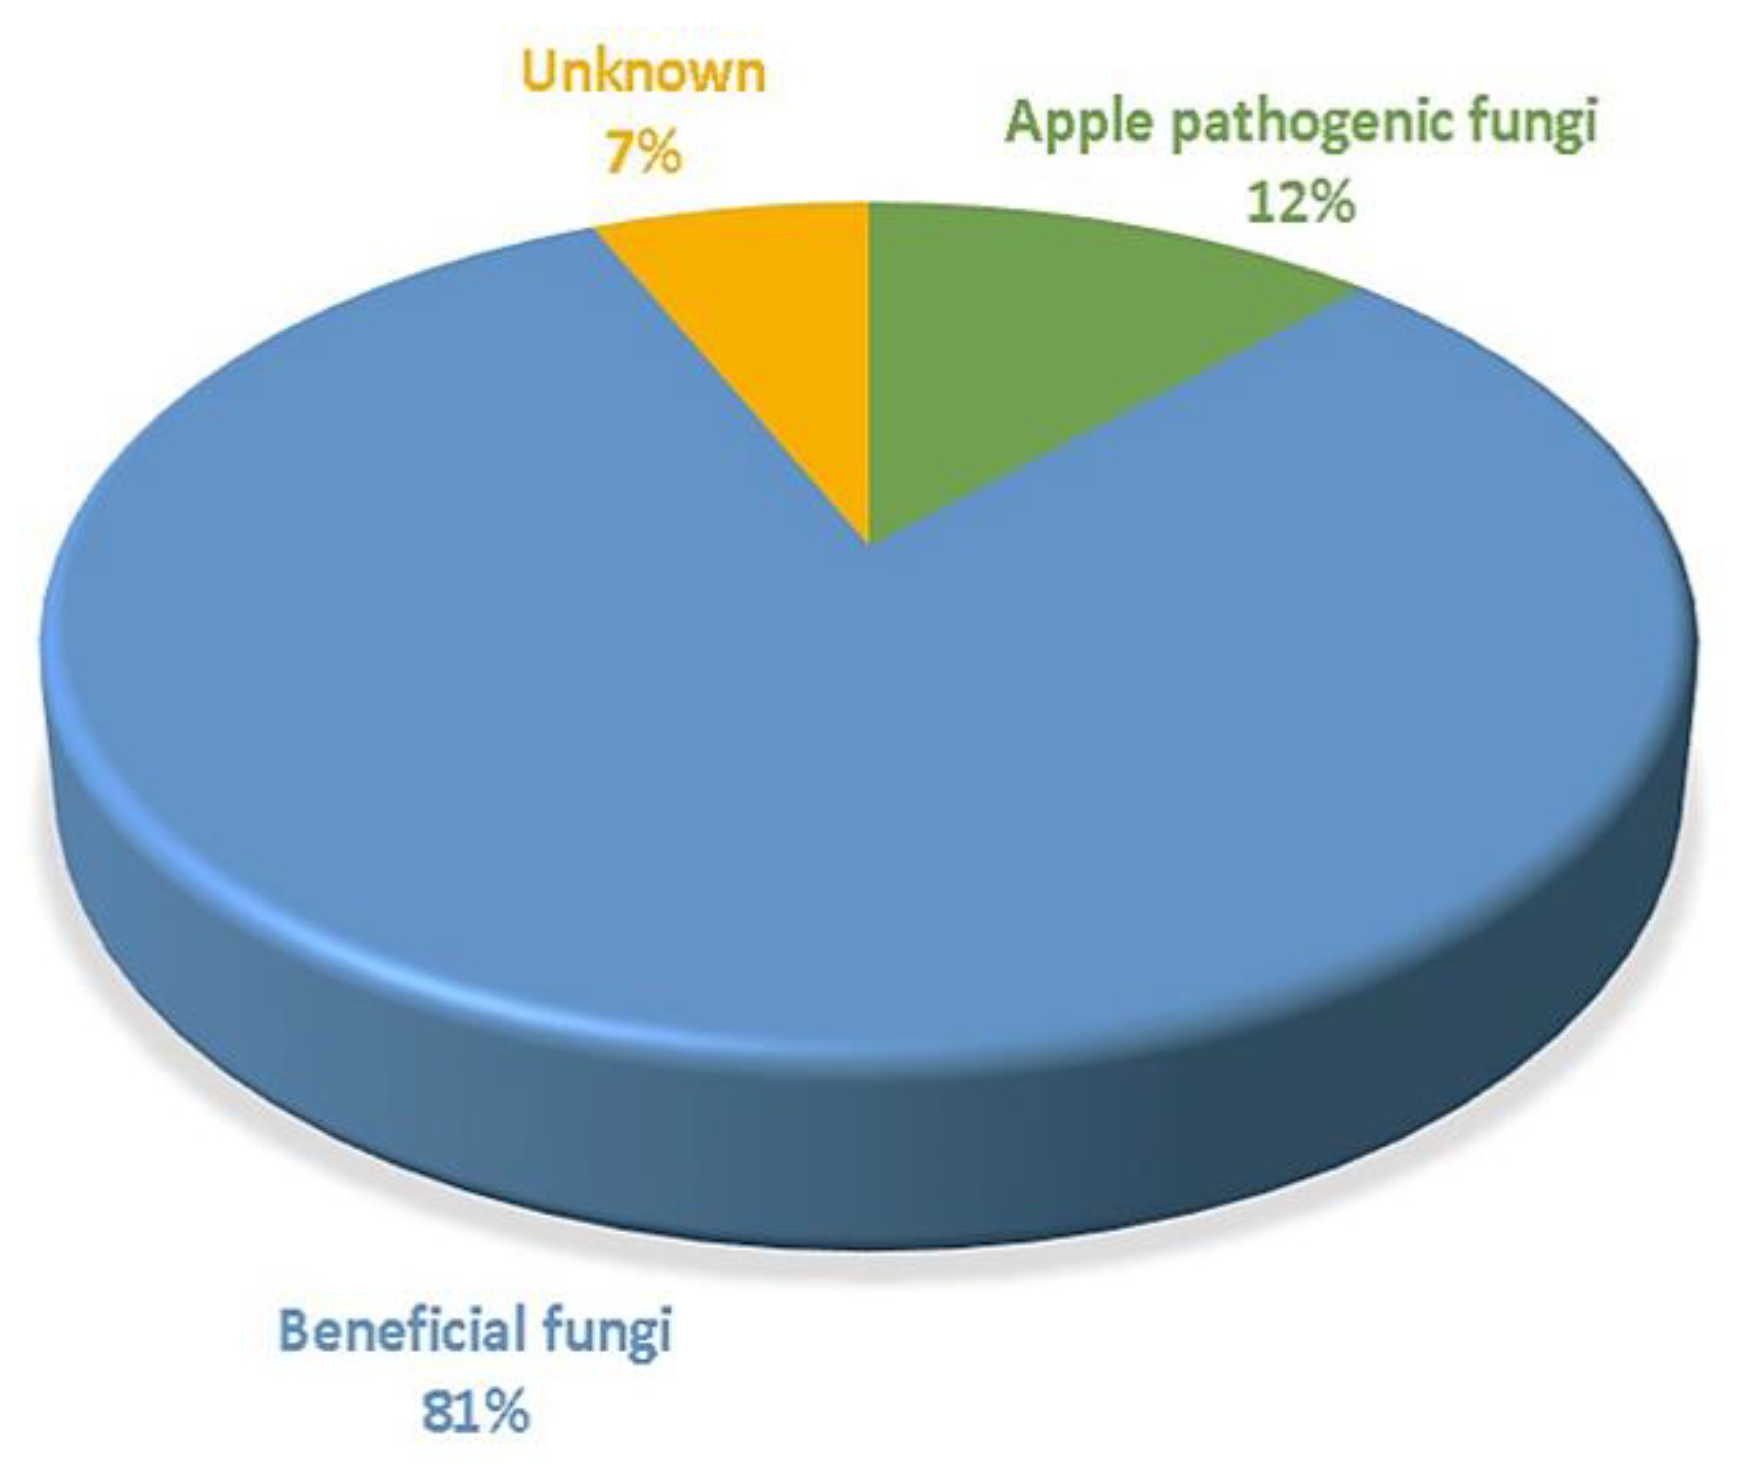 fungi as biocontrol agents wikipedia